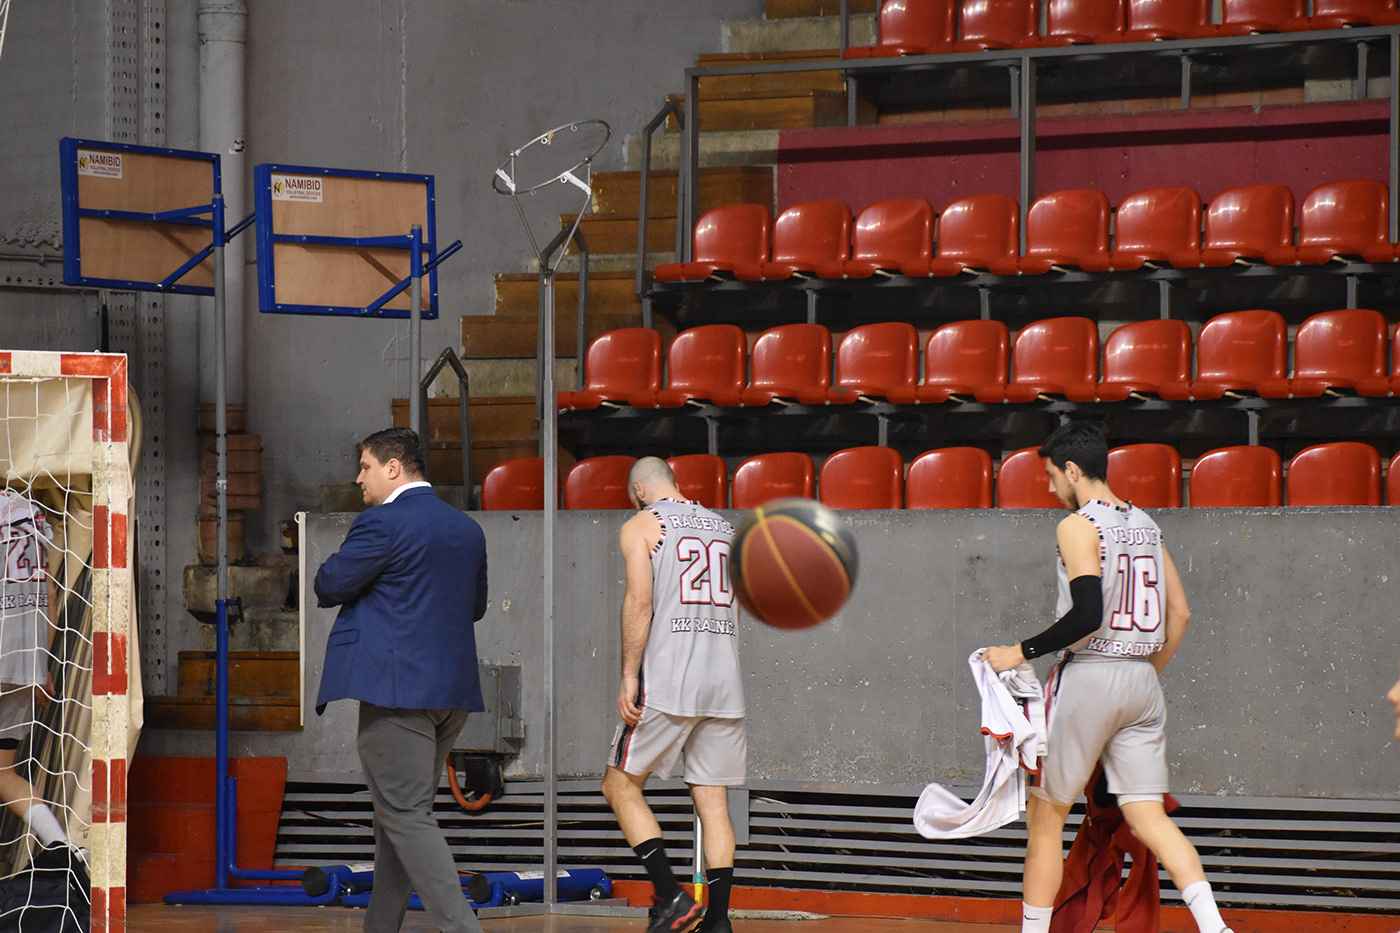 basketball kk radnicki kk zlatibor kls klsrbije Košarkaška liga Srbije Kragujevac Nikon D3500 radnicki kragujevac sports